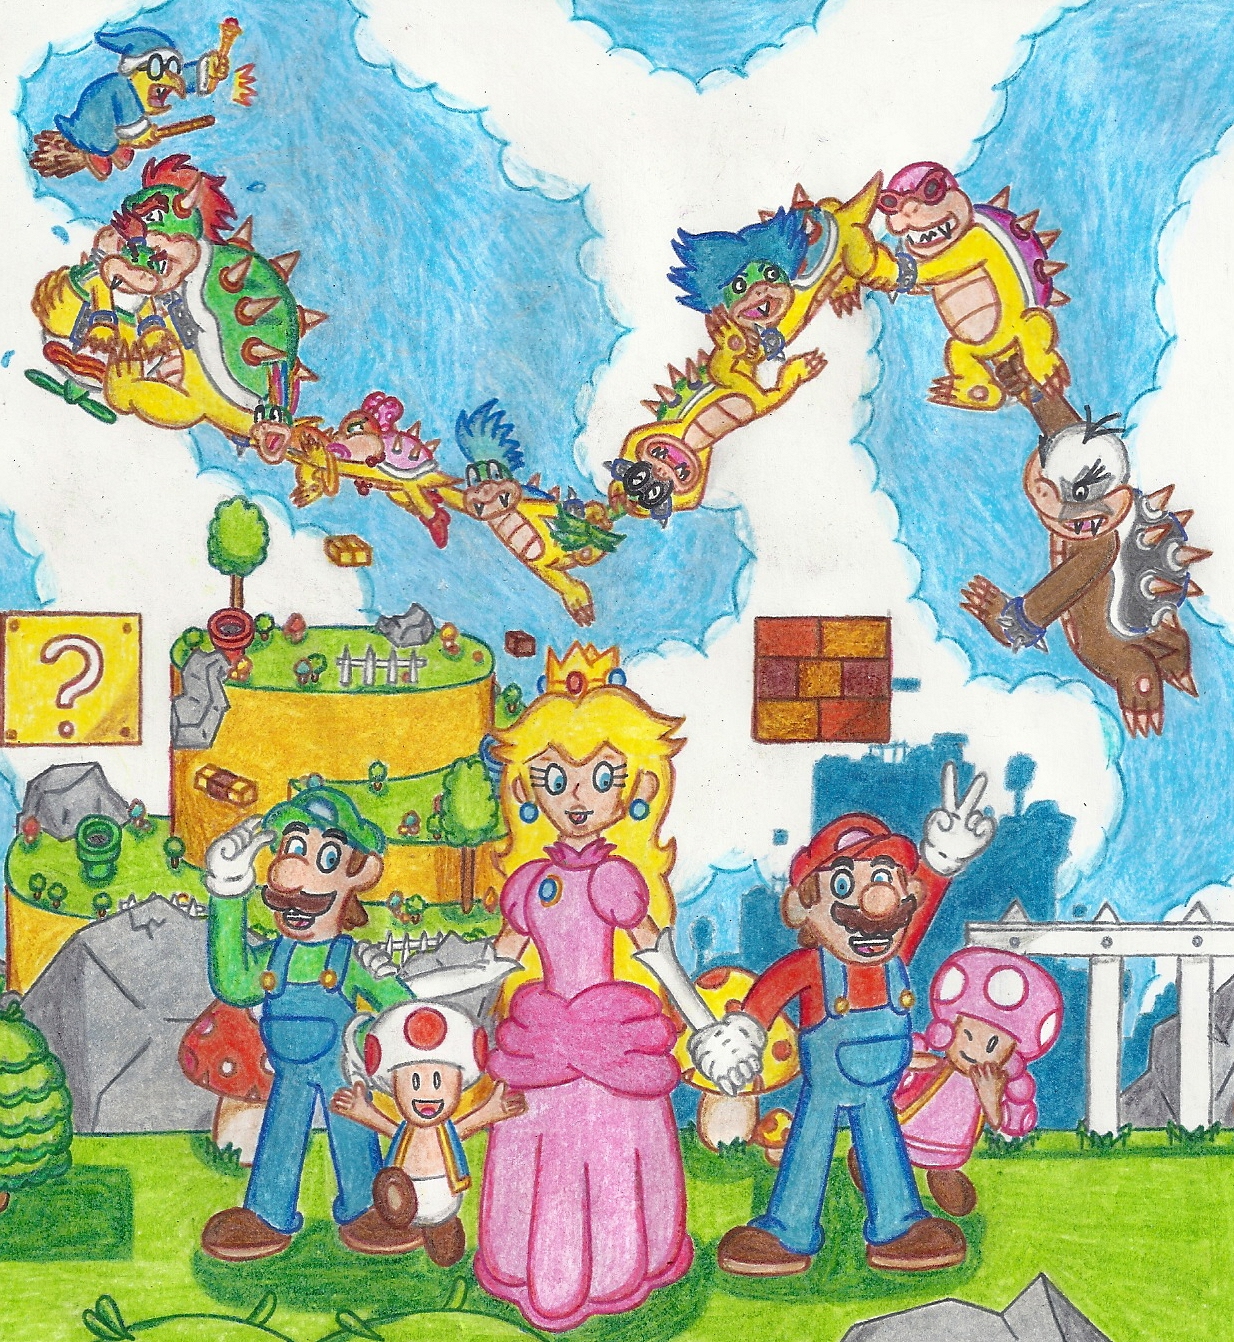 Super Mario bros lucky block by DrawReese2 on DeviantArt